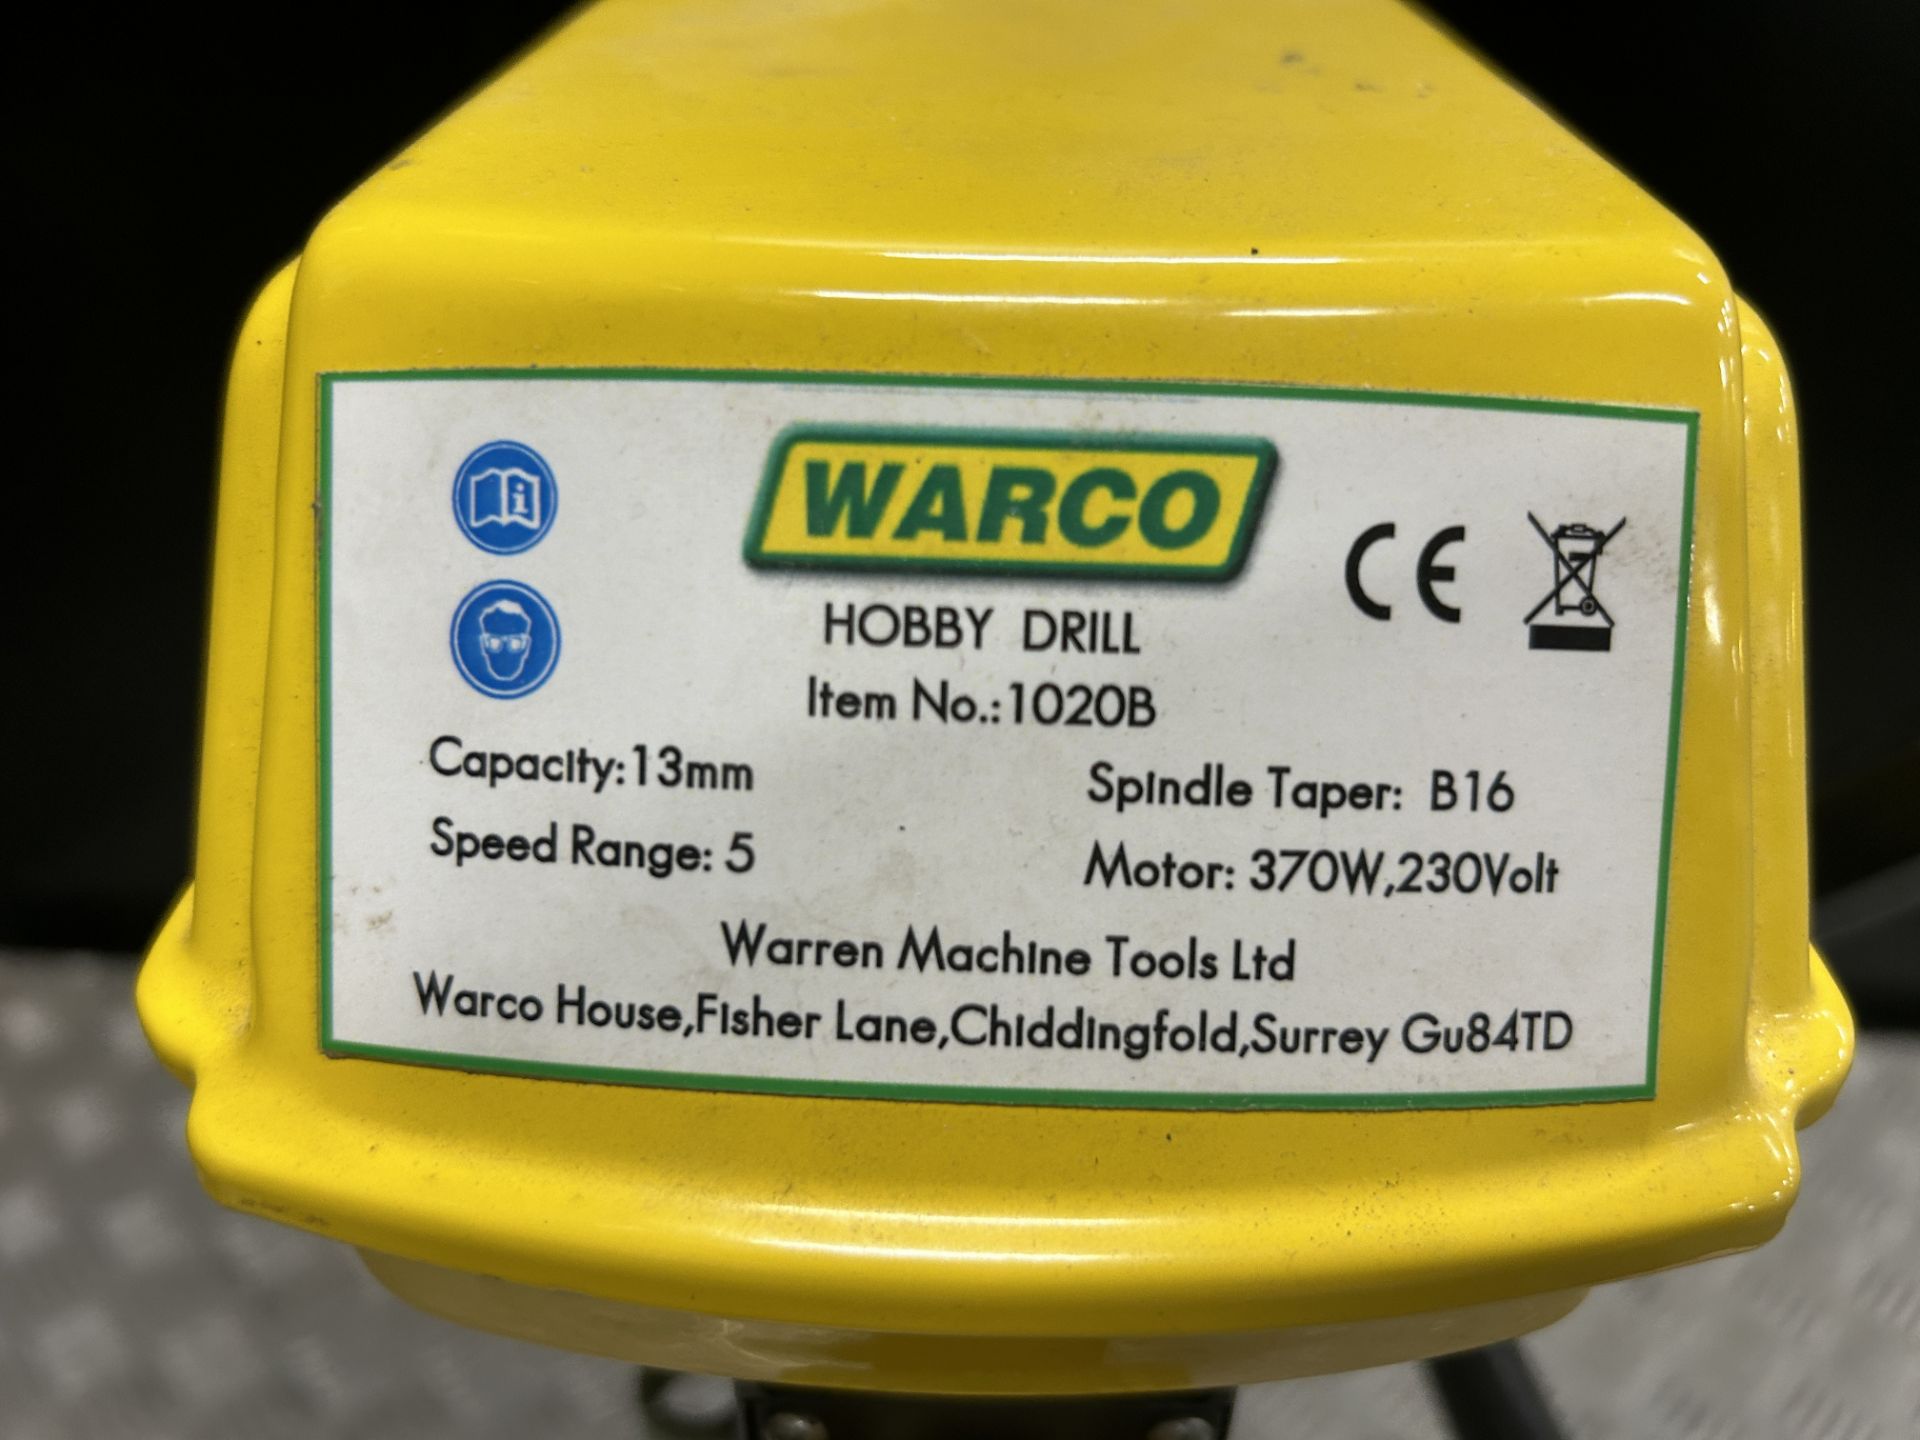 Warco 1020B hobby drill - Bild 4 aus 4